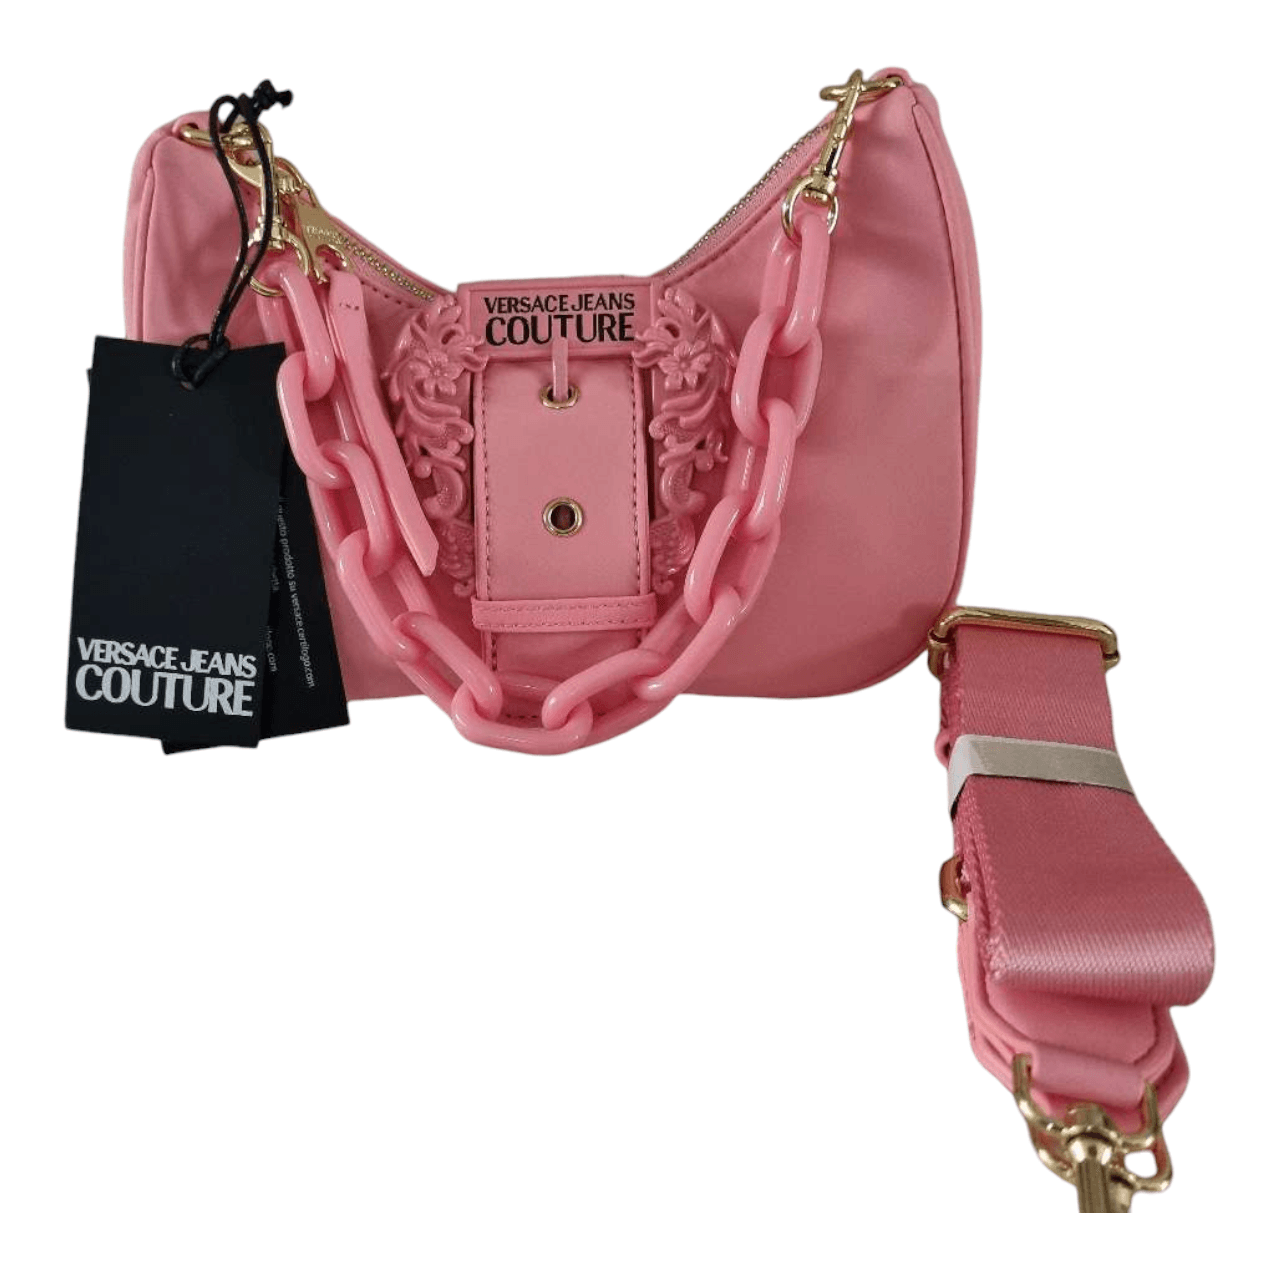 Versace Jeans Couture Pink Shoulder Bag